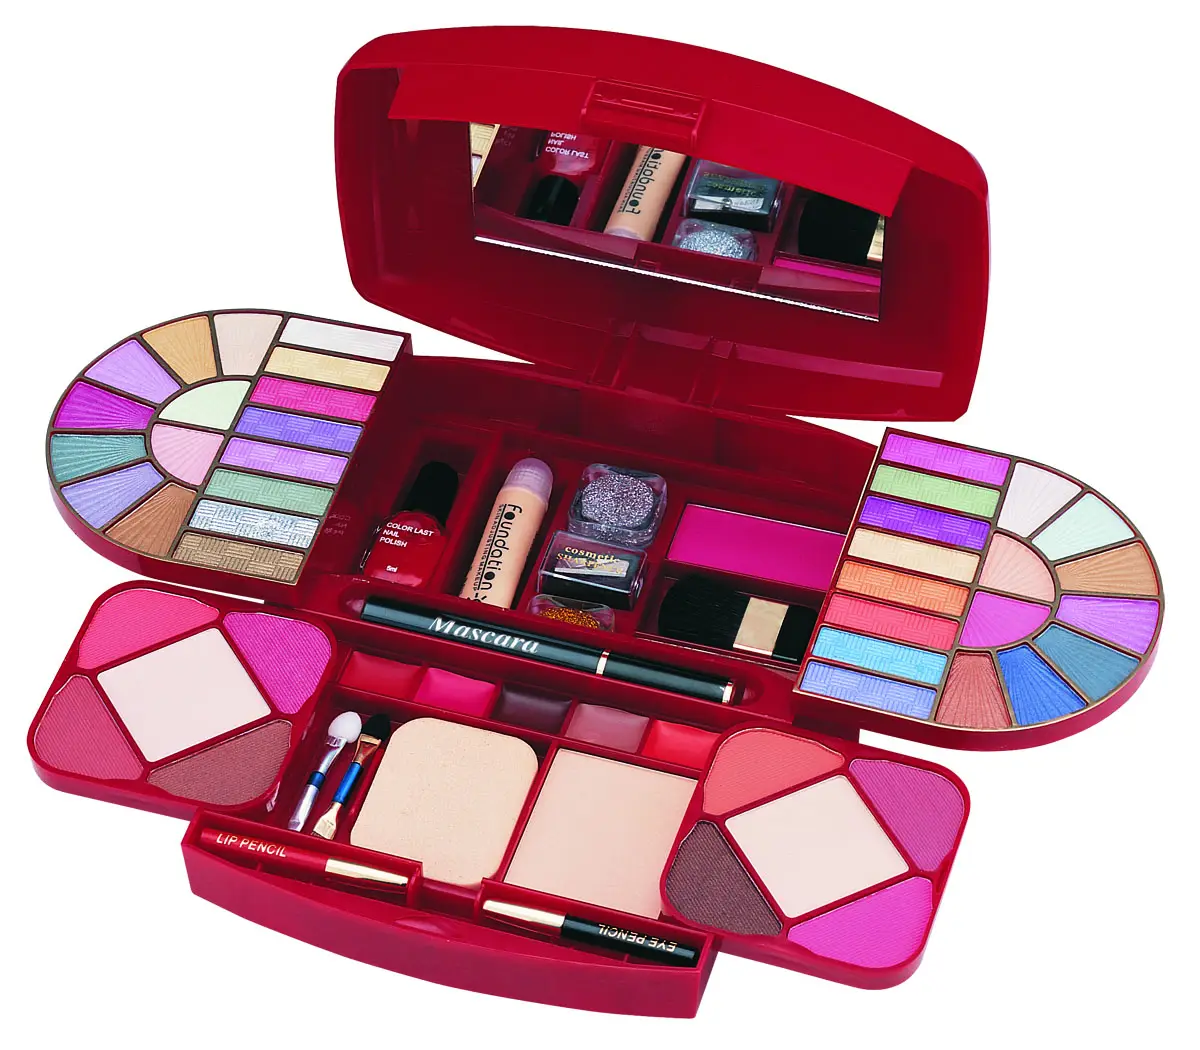 TLM Makeup Cosmetics Box Makeup Sets Product Makeup Kit Box For Professionals Full Set Eyeshadow Make Up Gift Sets